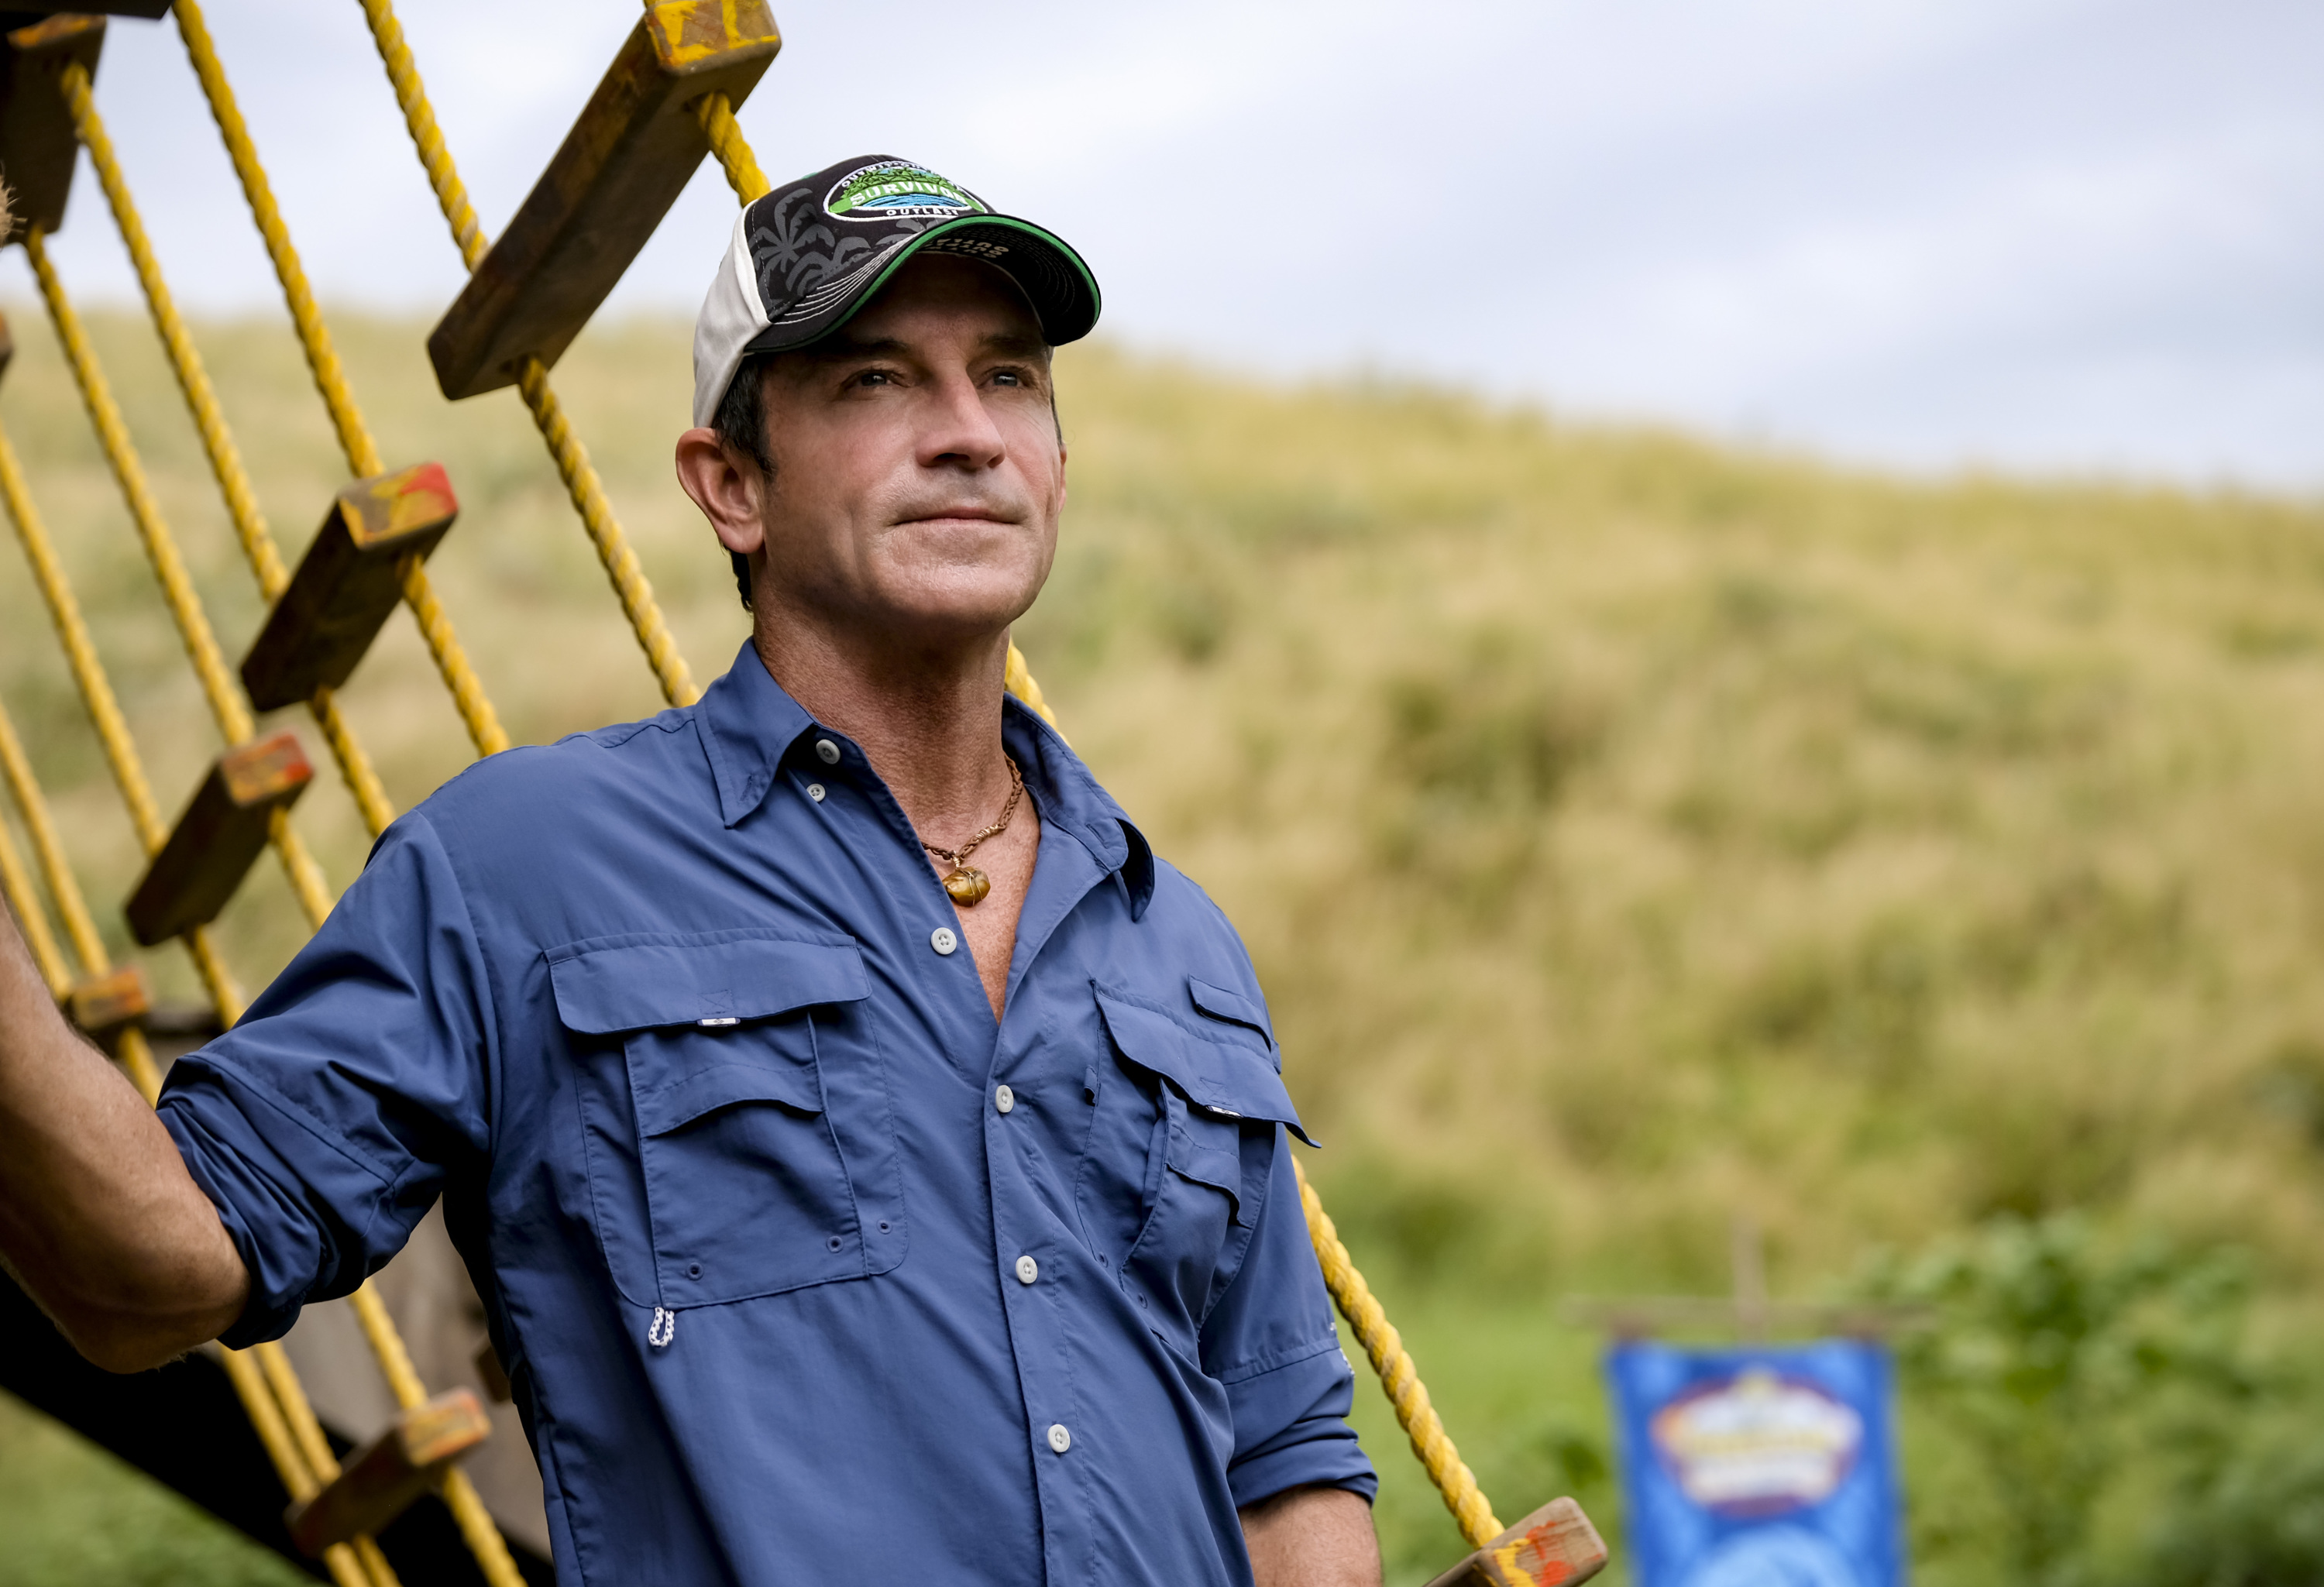 'Survivor' Season 41 host Jeff Probst wears a blue button-up shirt and a 'Survivor' hat.